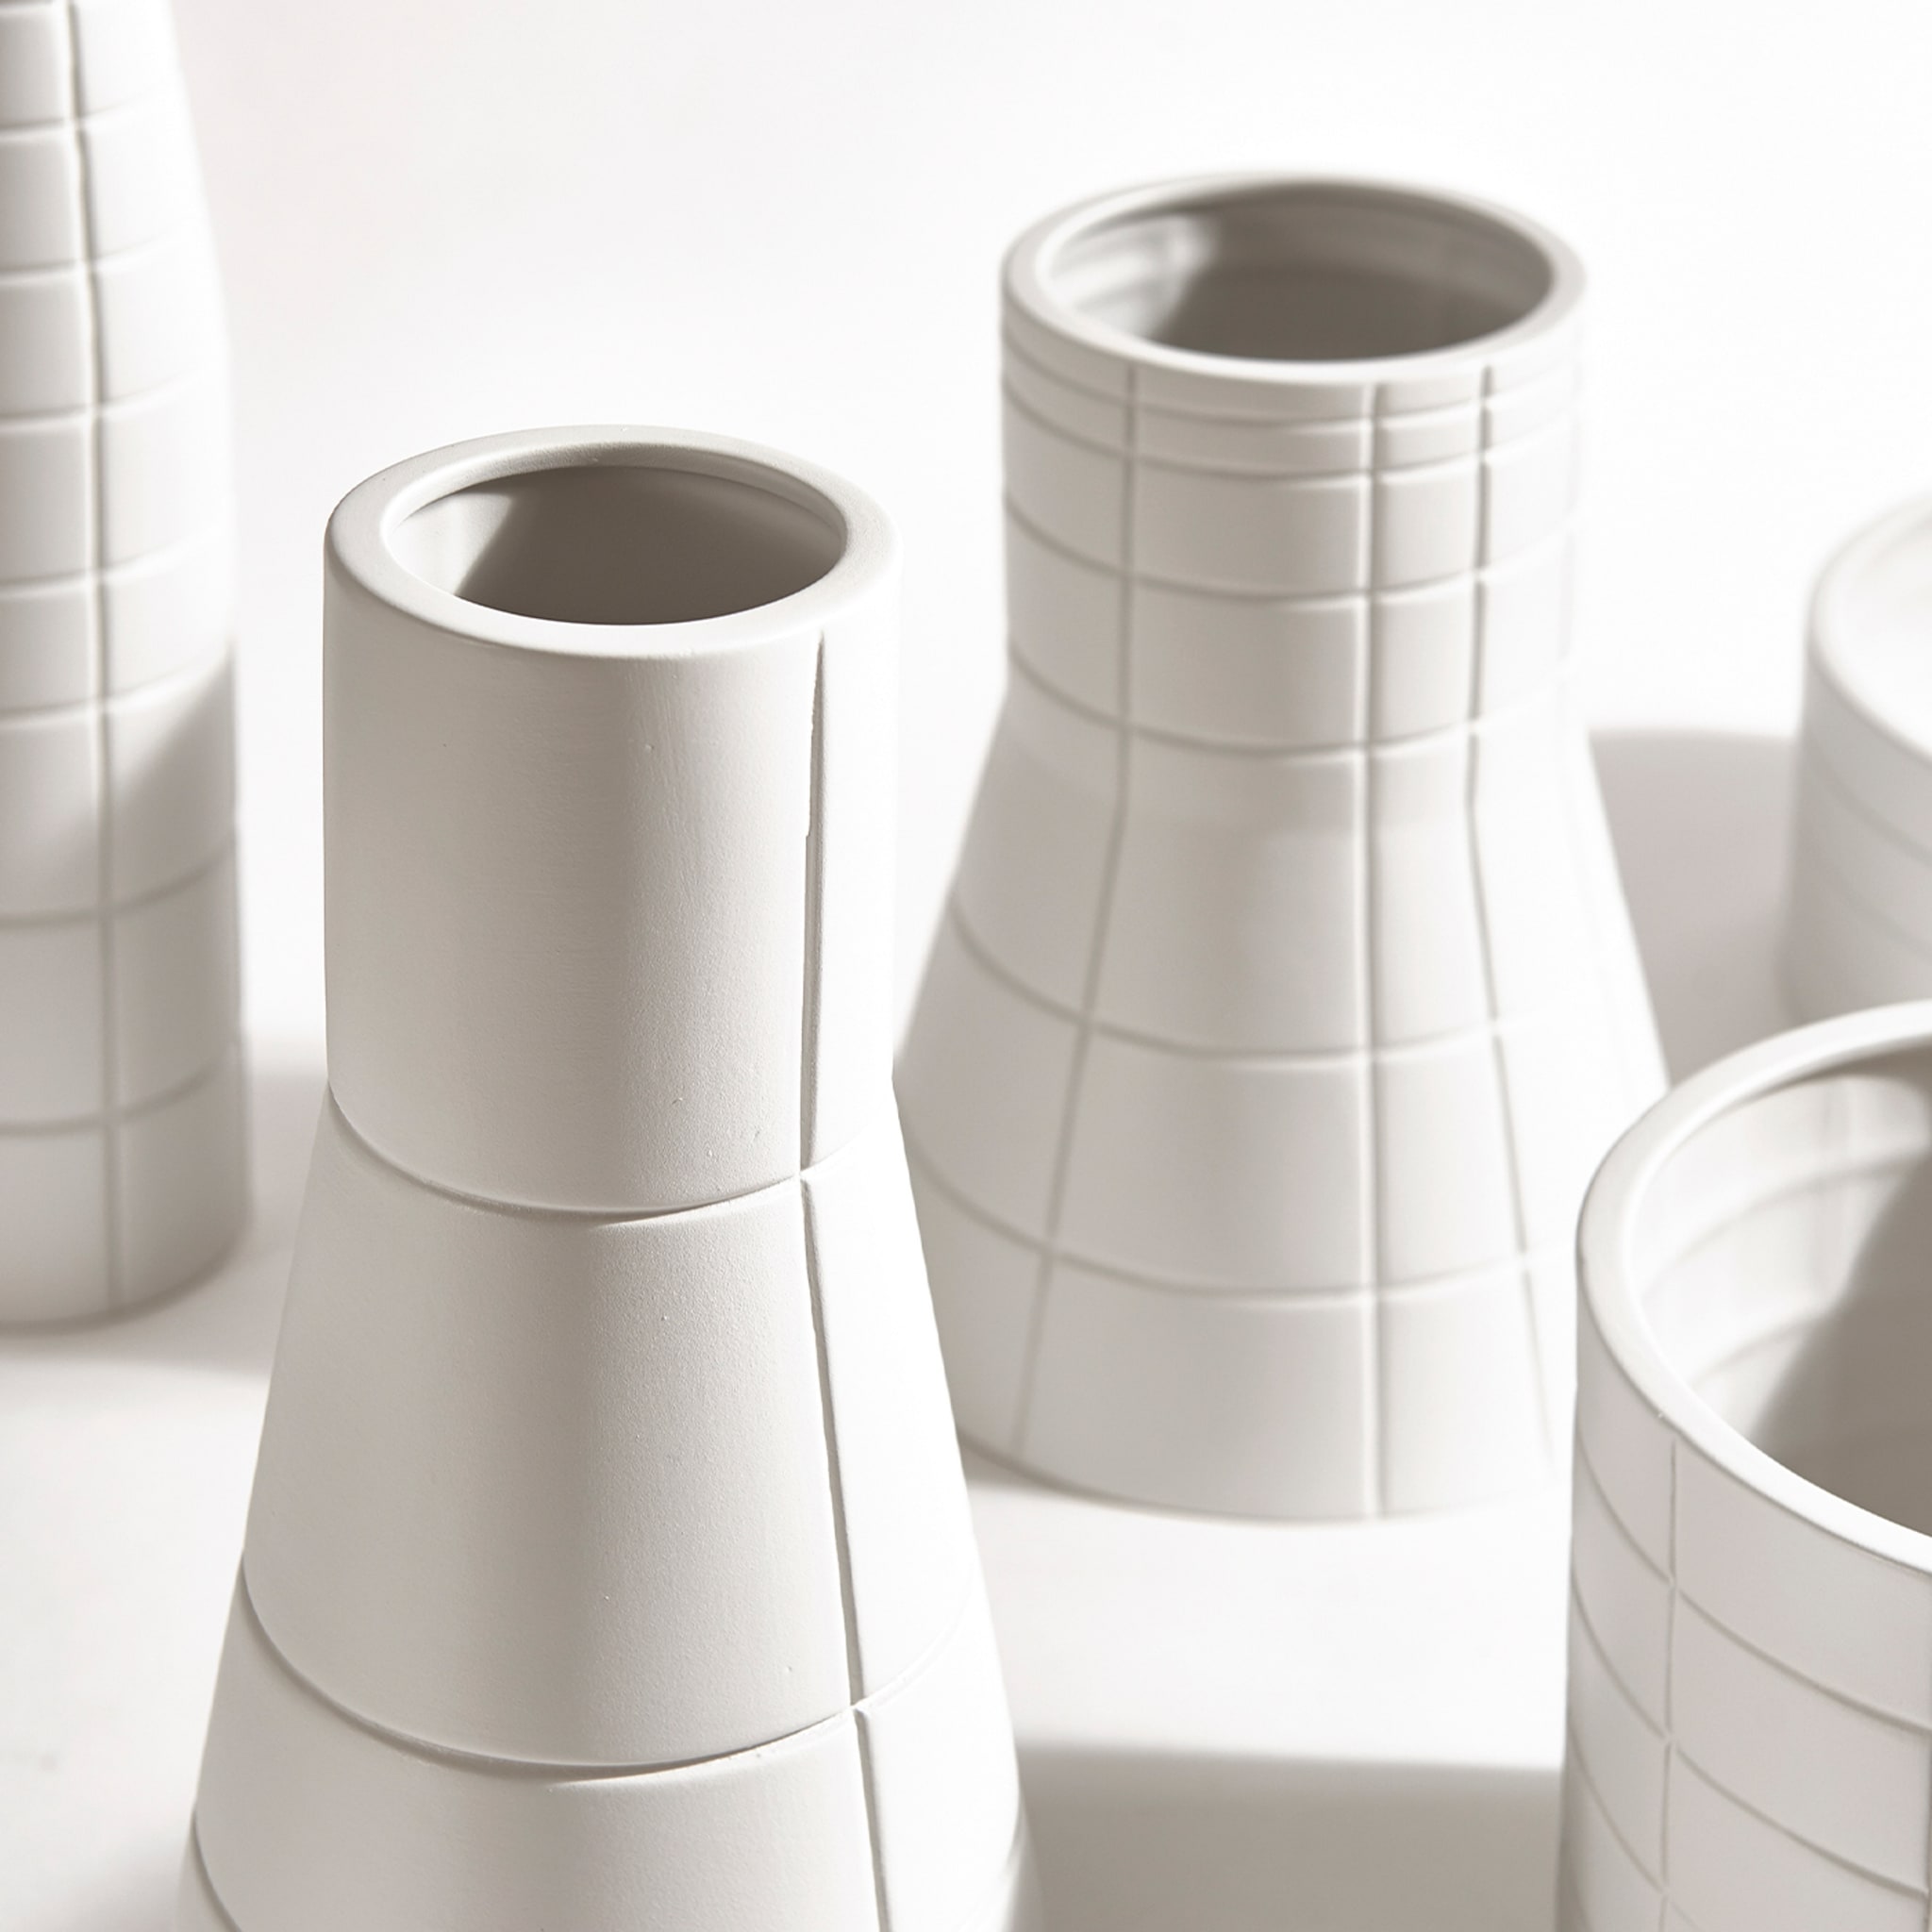 Rikuadra White Ceramic Vase #3 - Alternative view 3